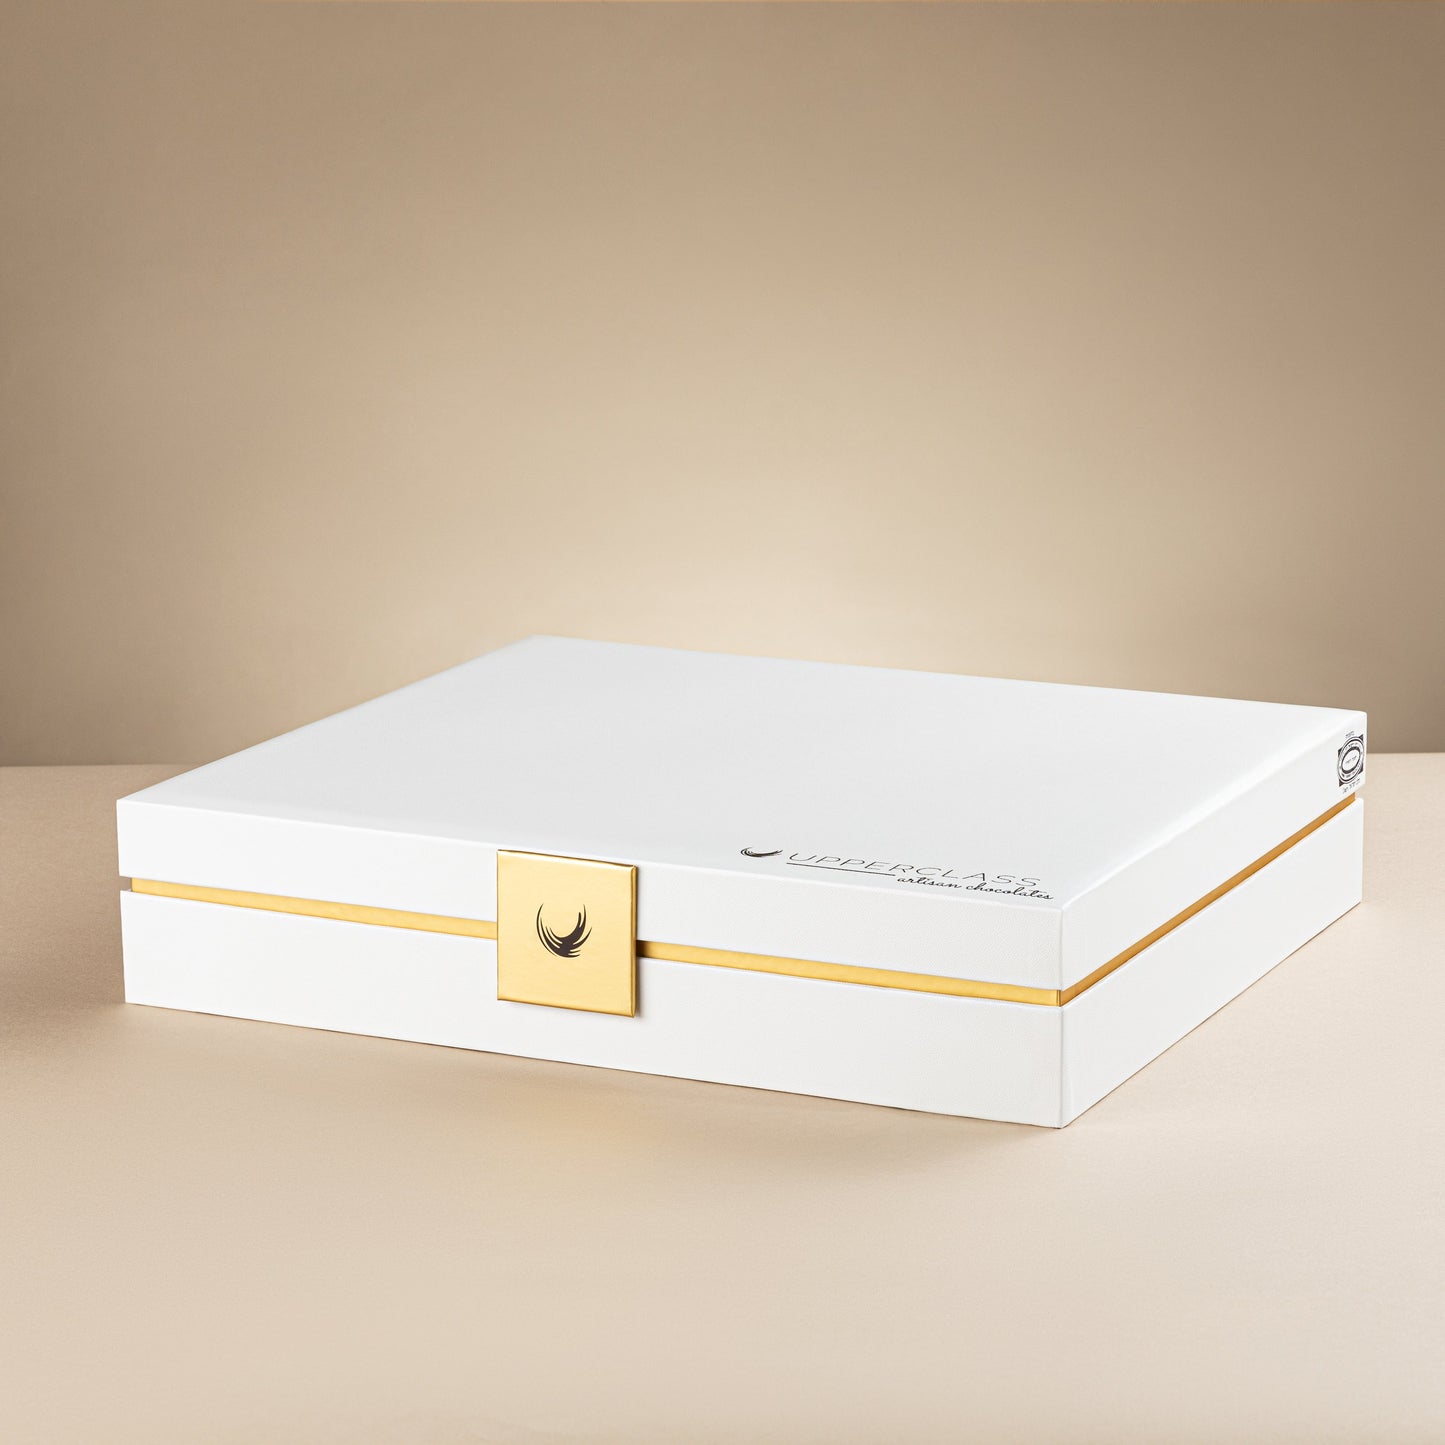 Featured Box. 12 Pc. Luscious  Luxury Truffle